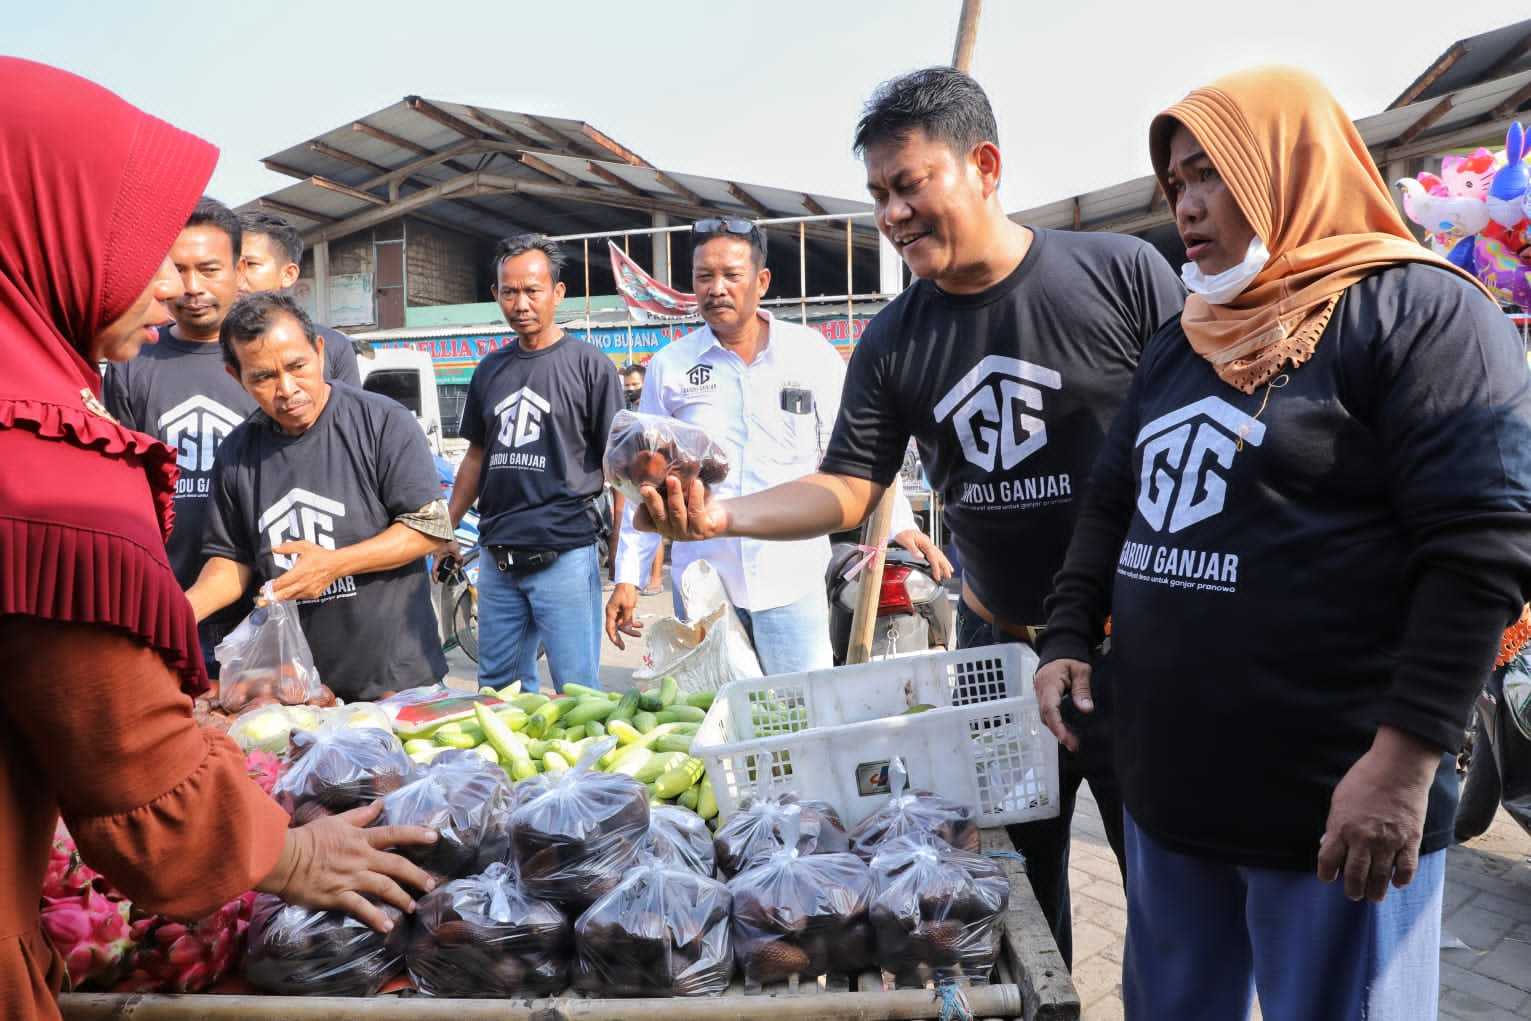 Gardu Ganjar Berbagi Sayur hingga Deklarasi Dukungan Bersama Pedagang di Pasar Cikande 1